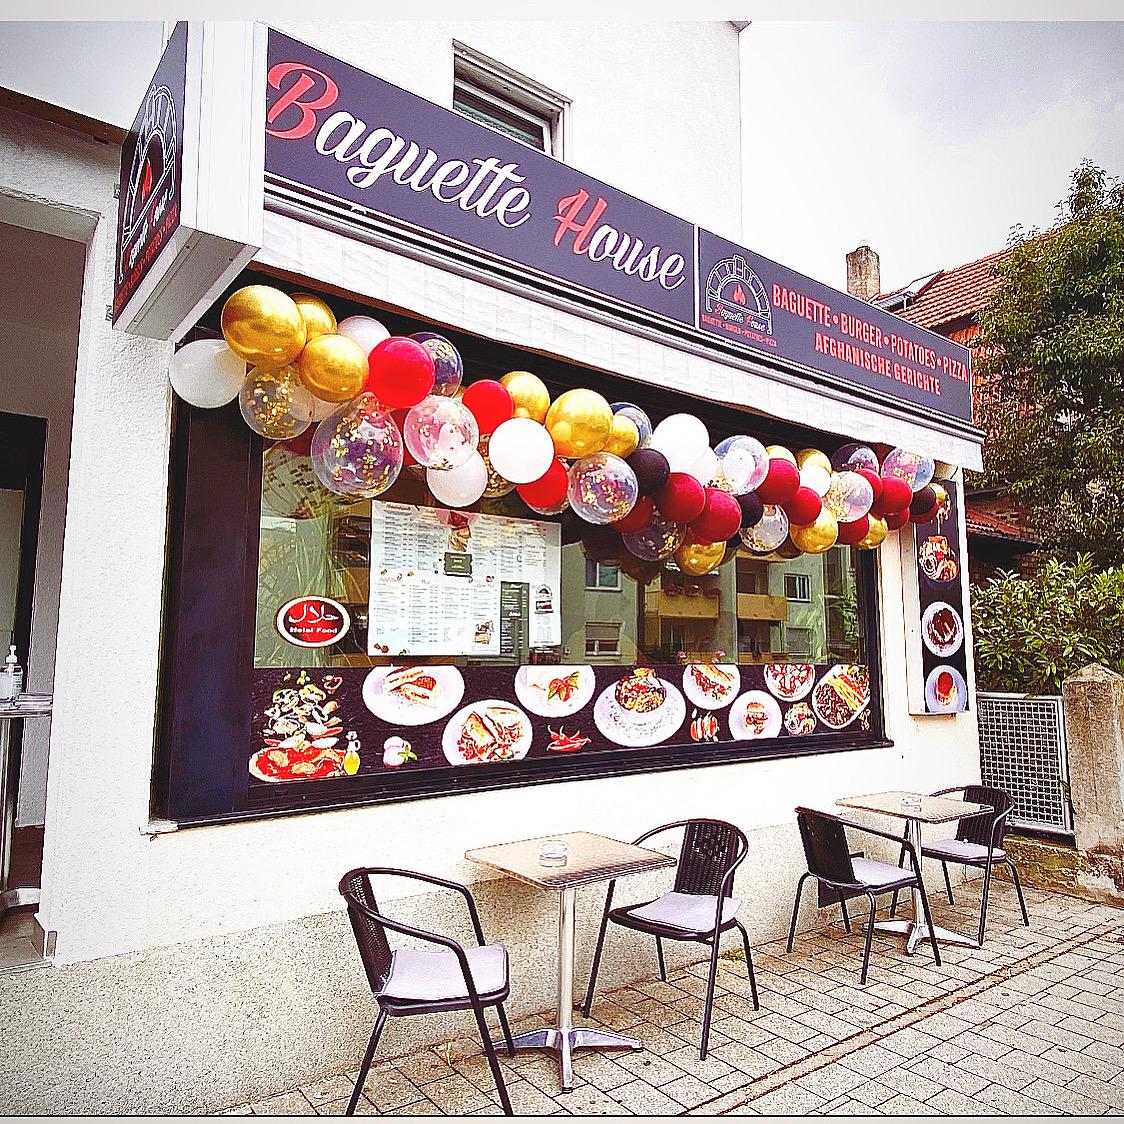 Restaurant "Baguette House" in Mainz